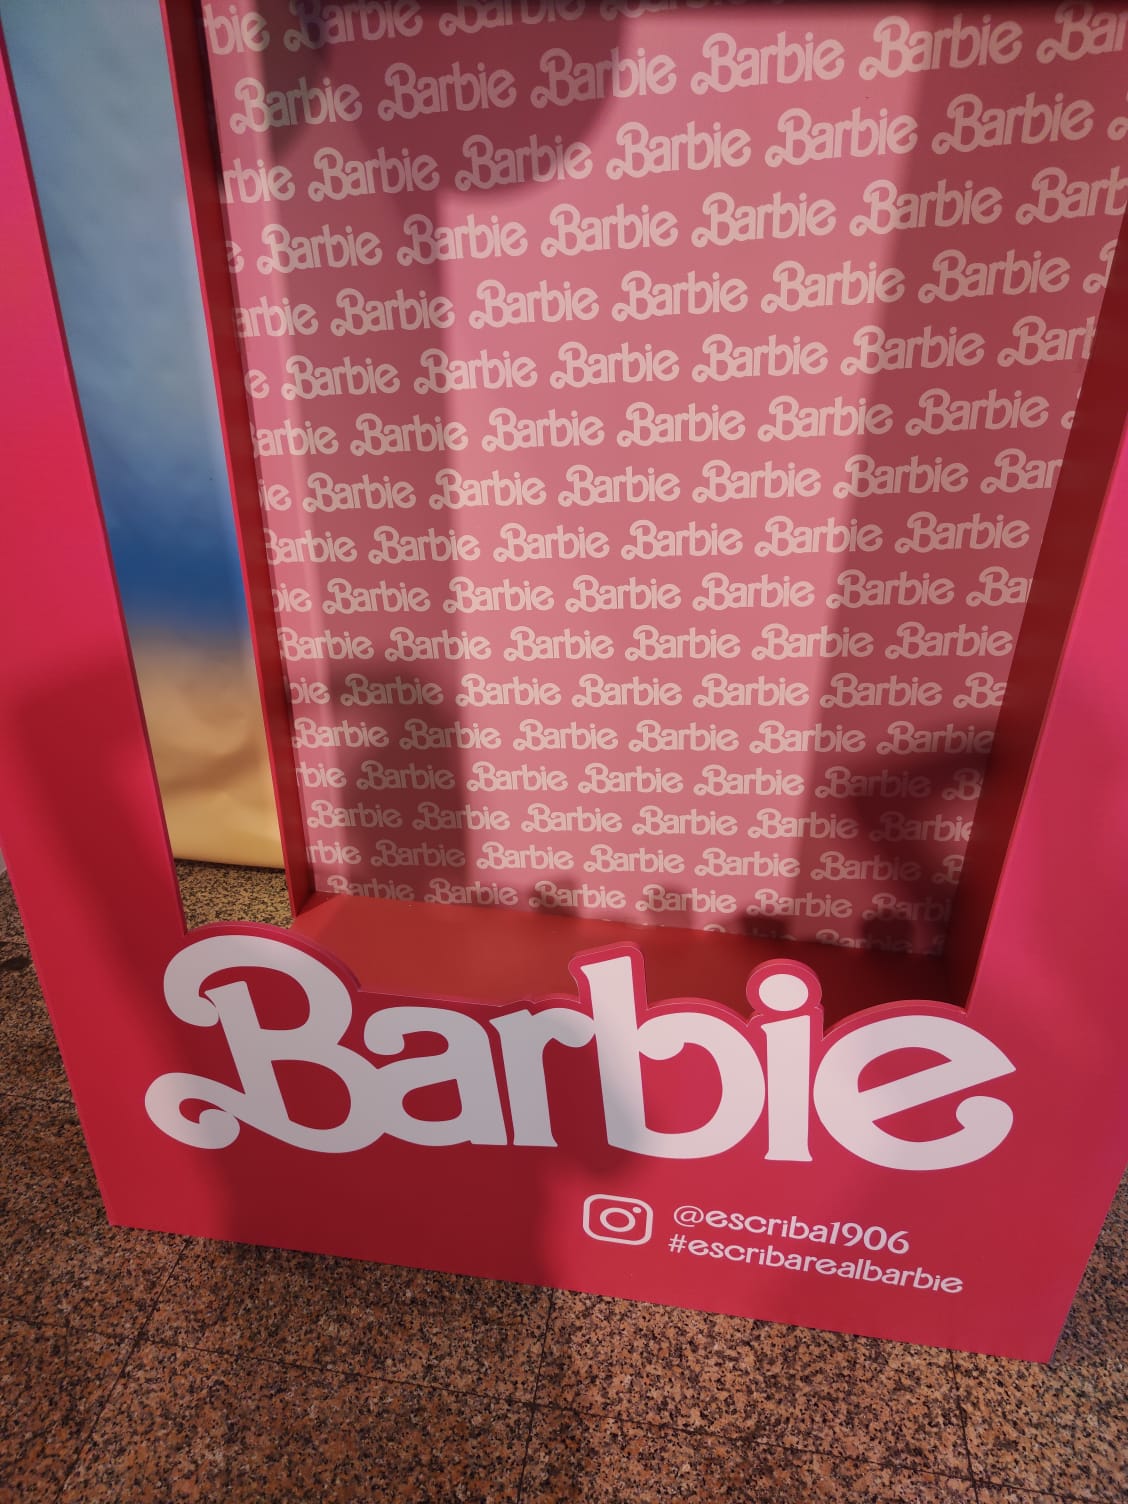 Photocall Barbie